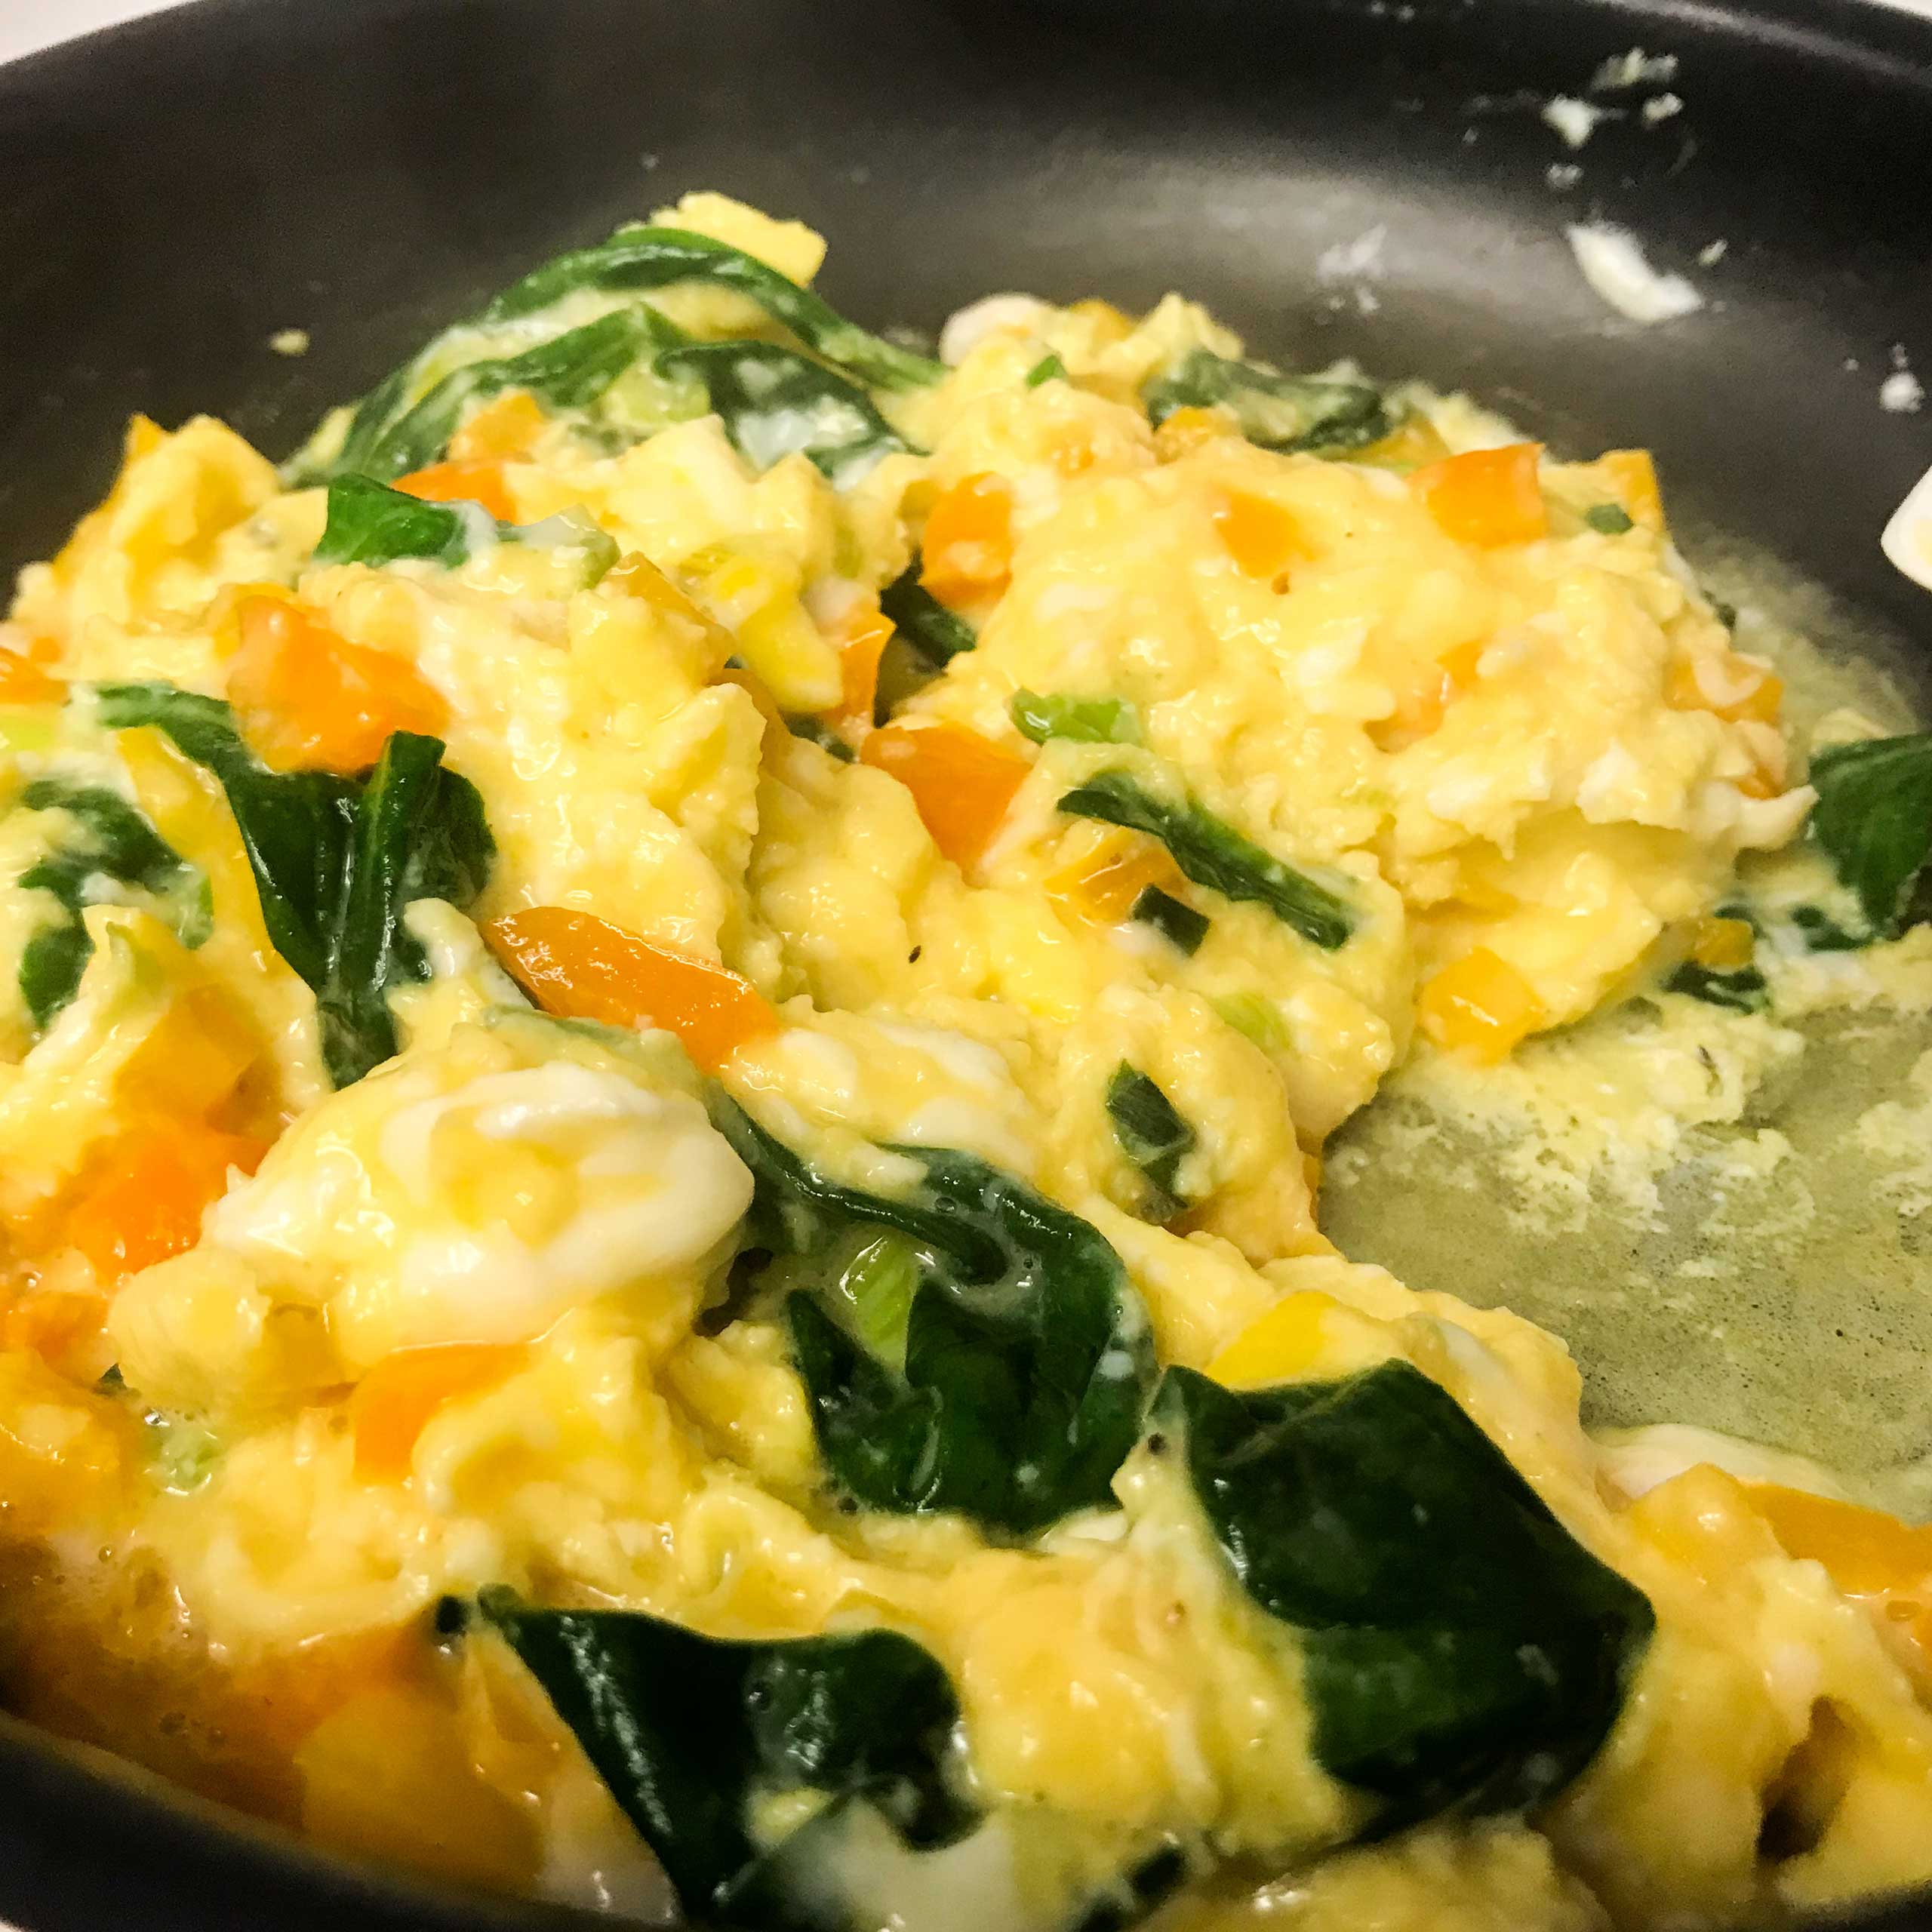 eggs and veggies in skillet.